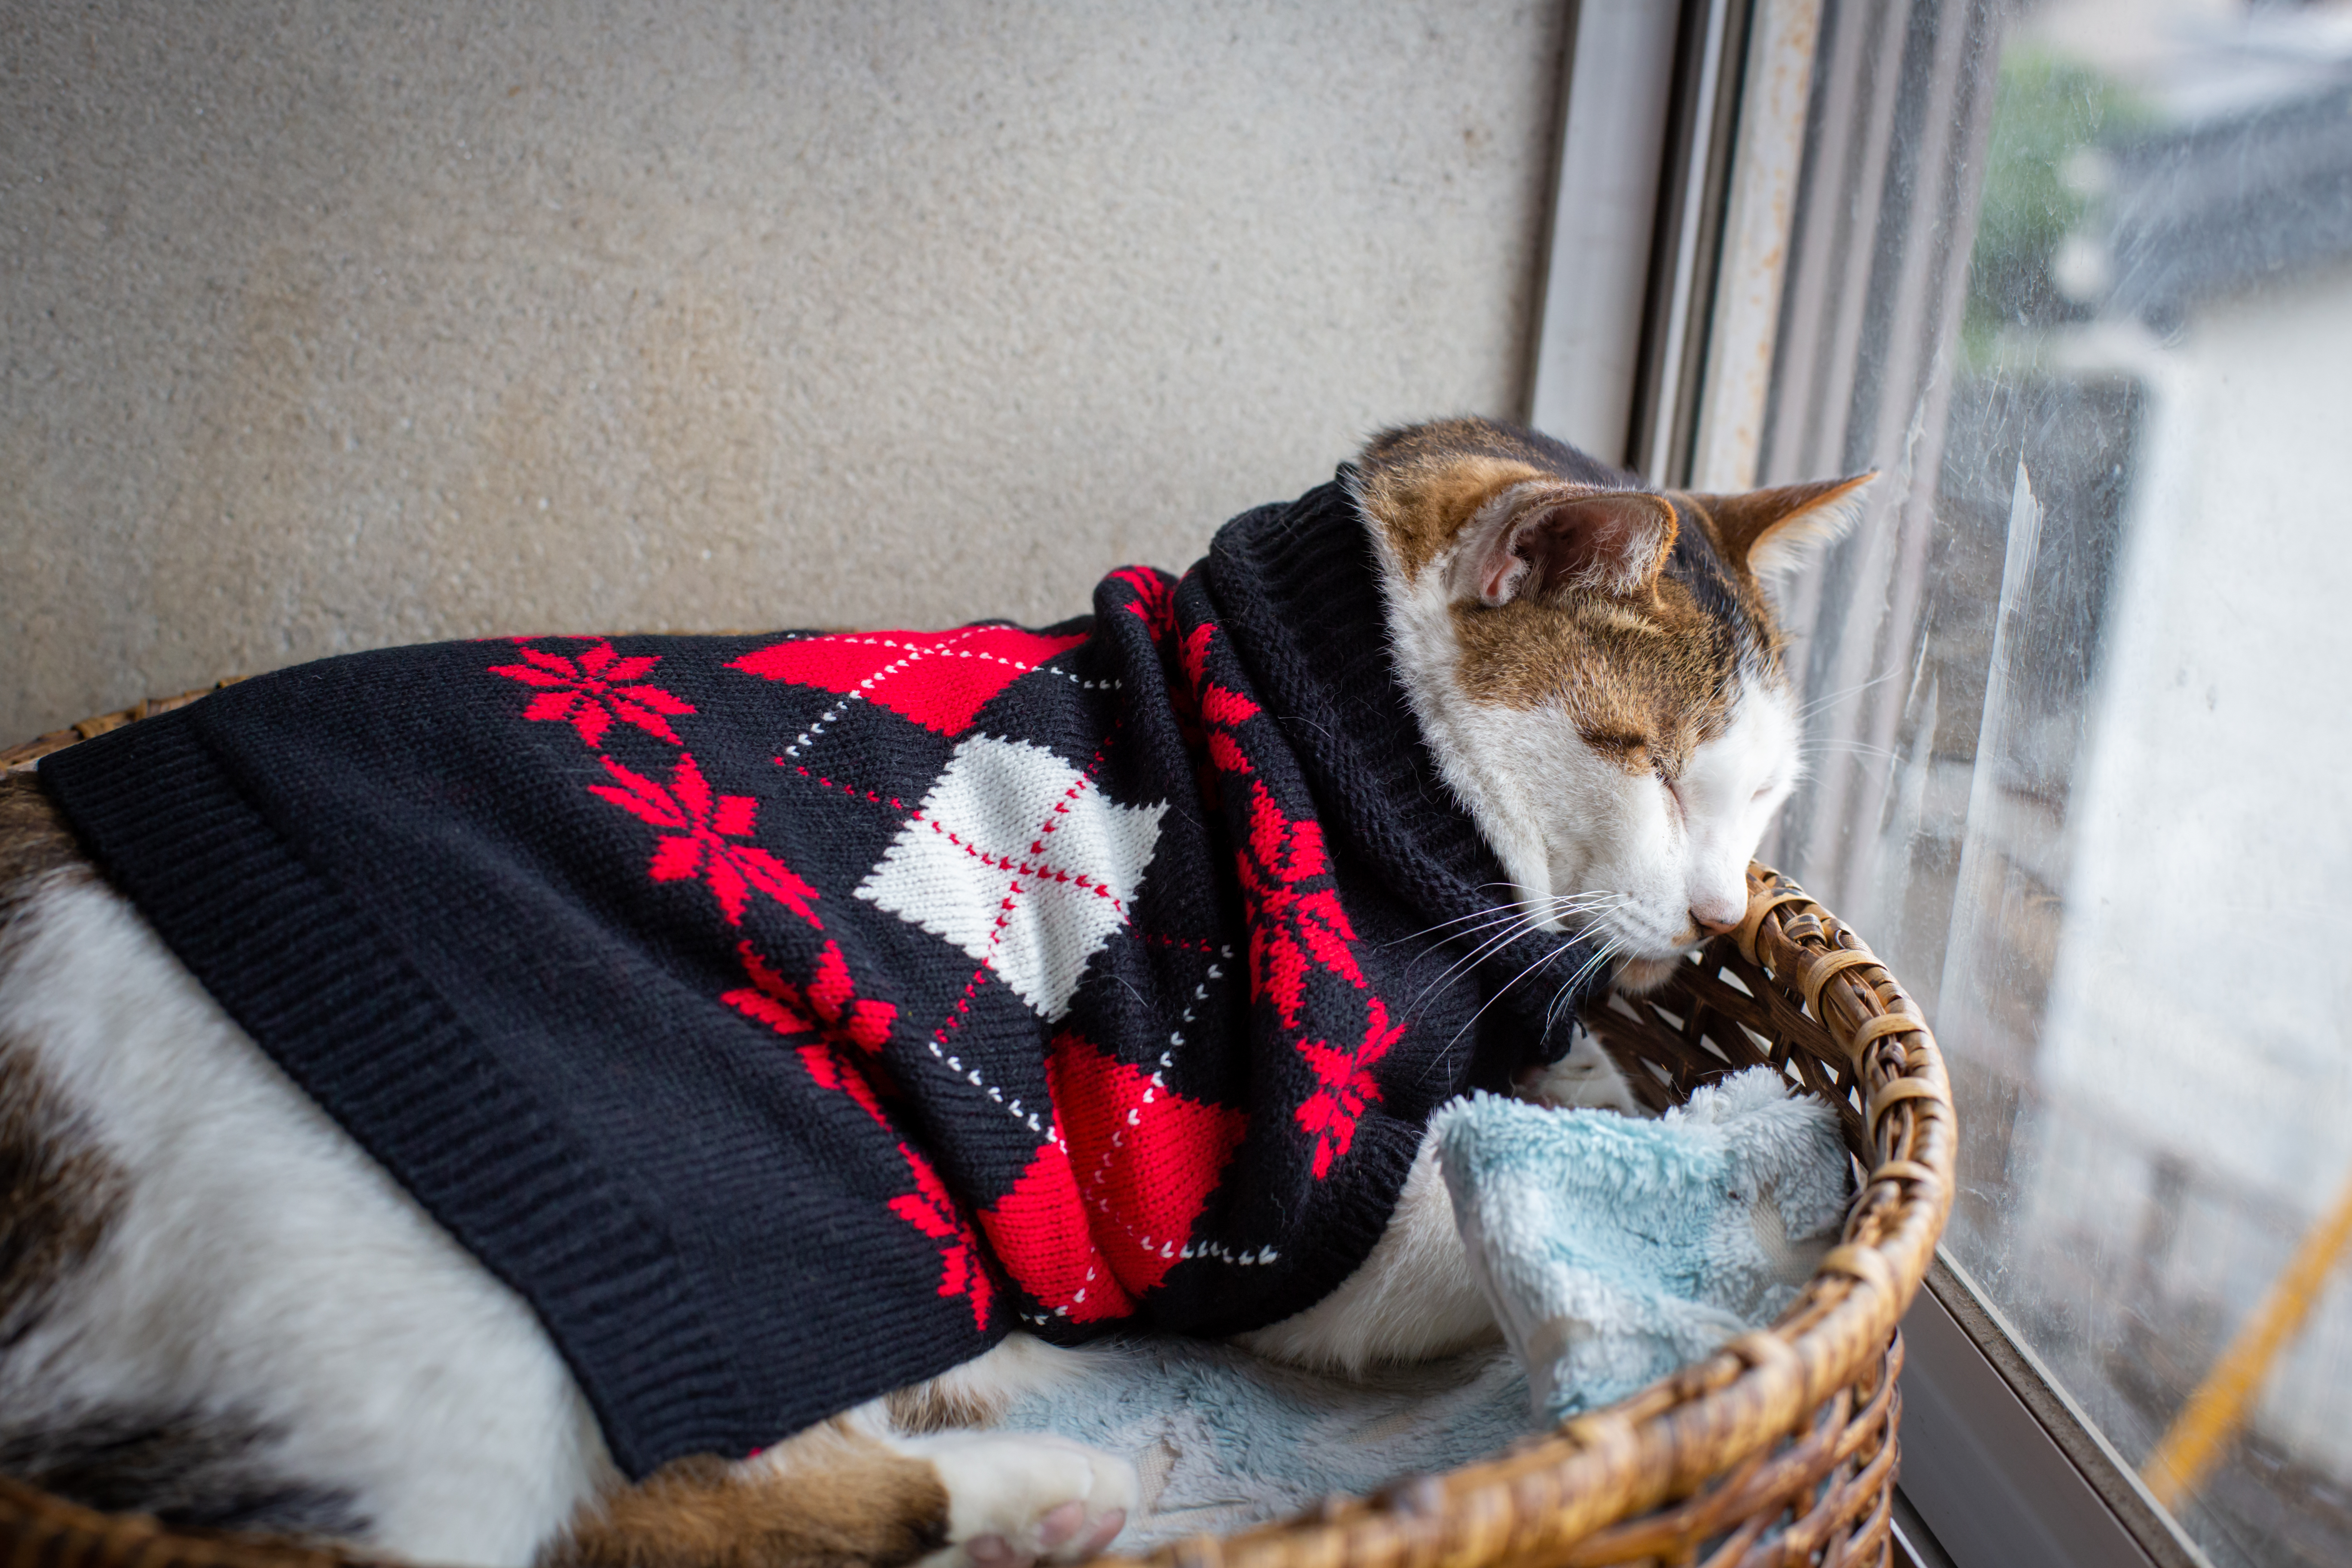 Do cats need winter clothing? – Adventure Cats